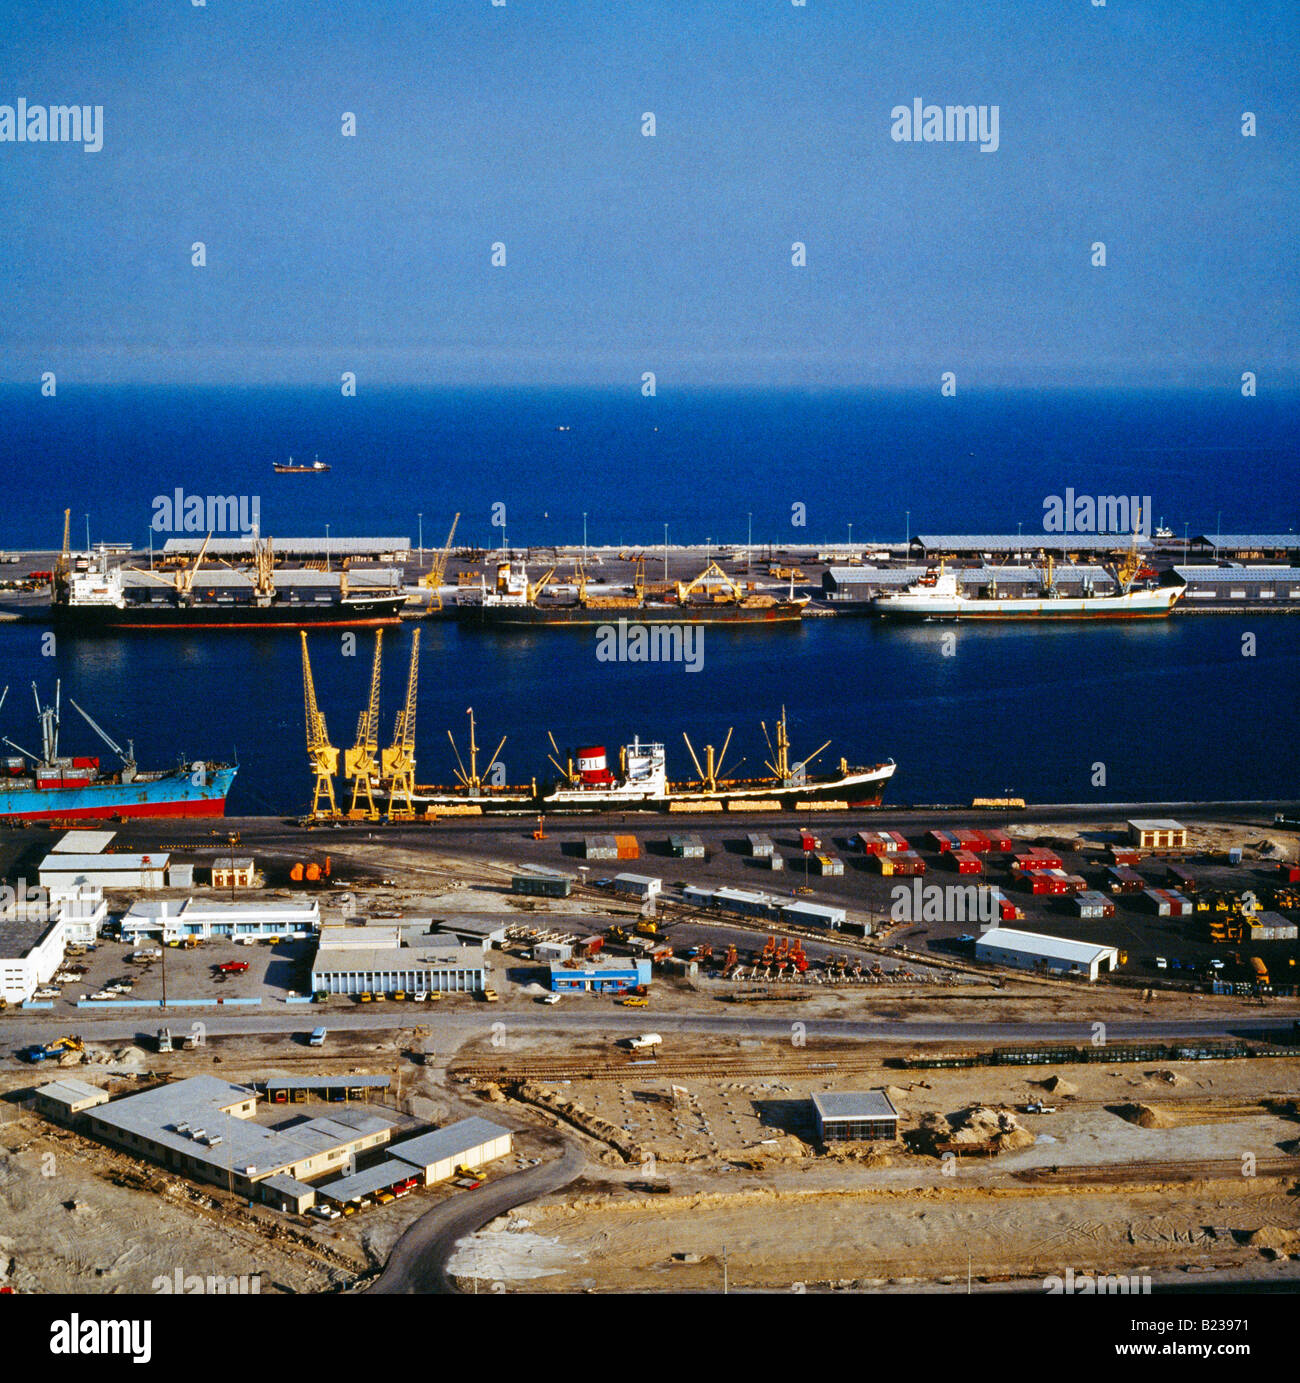 Saudi arabia port hi-res stock photography and images - Alamy